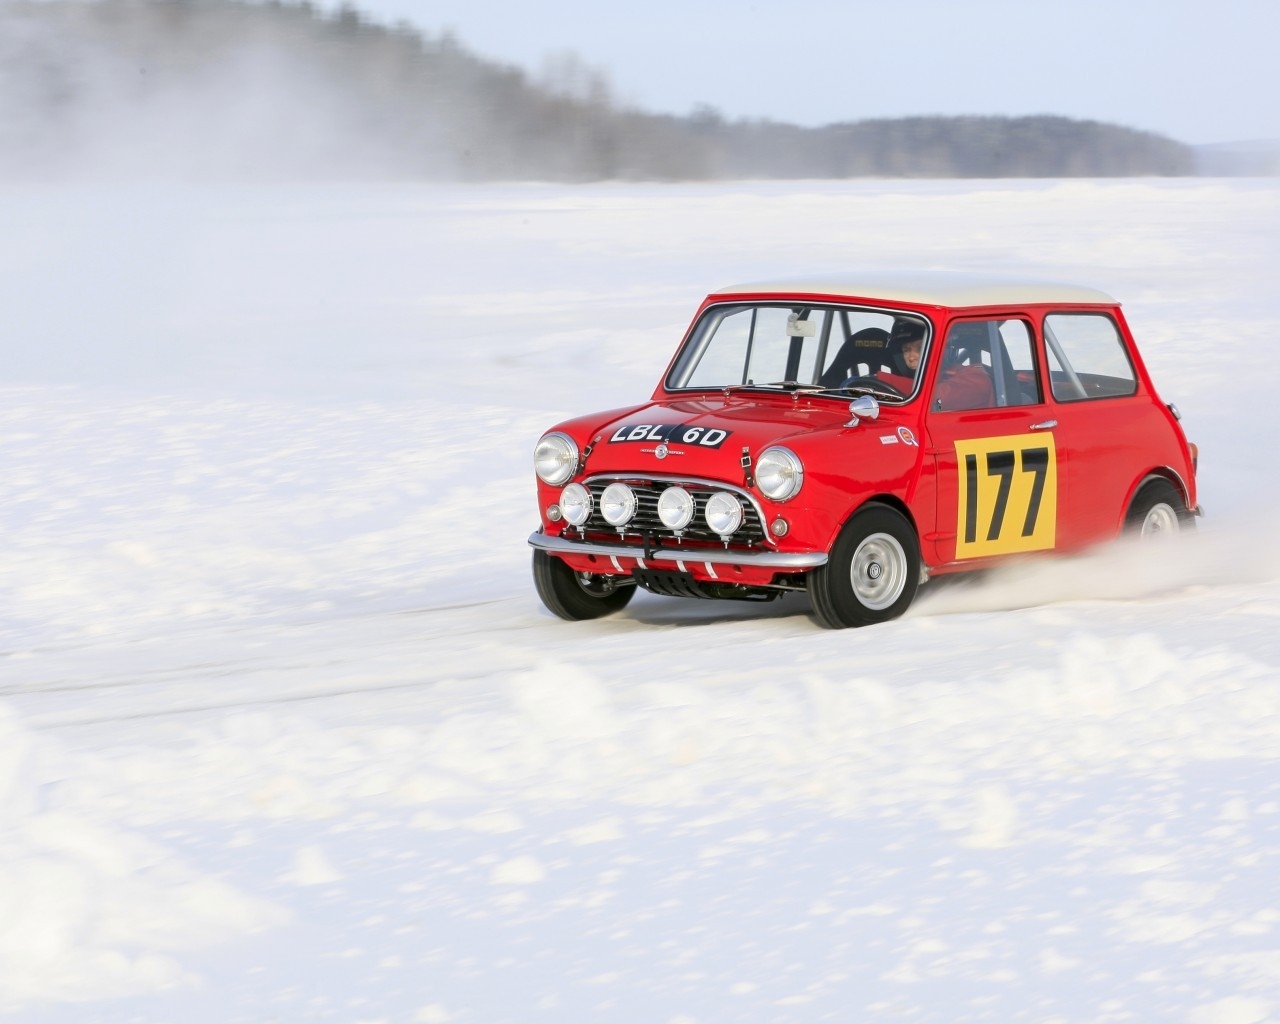 Mini Snow Race for 1280 x 1024 resolution